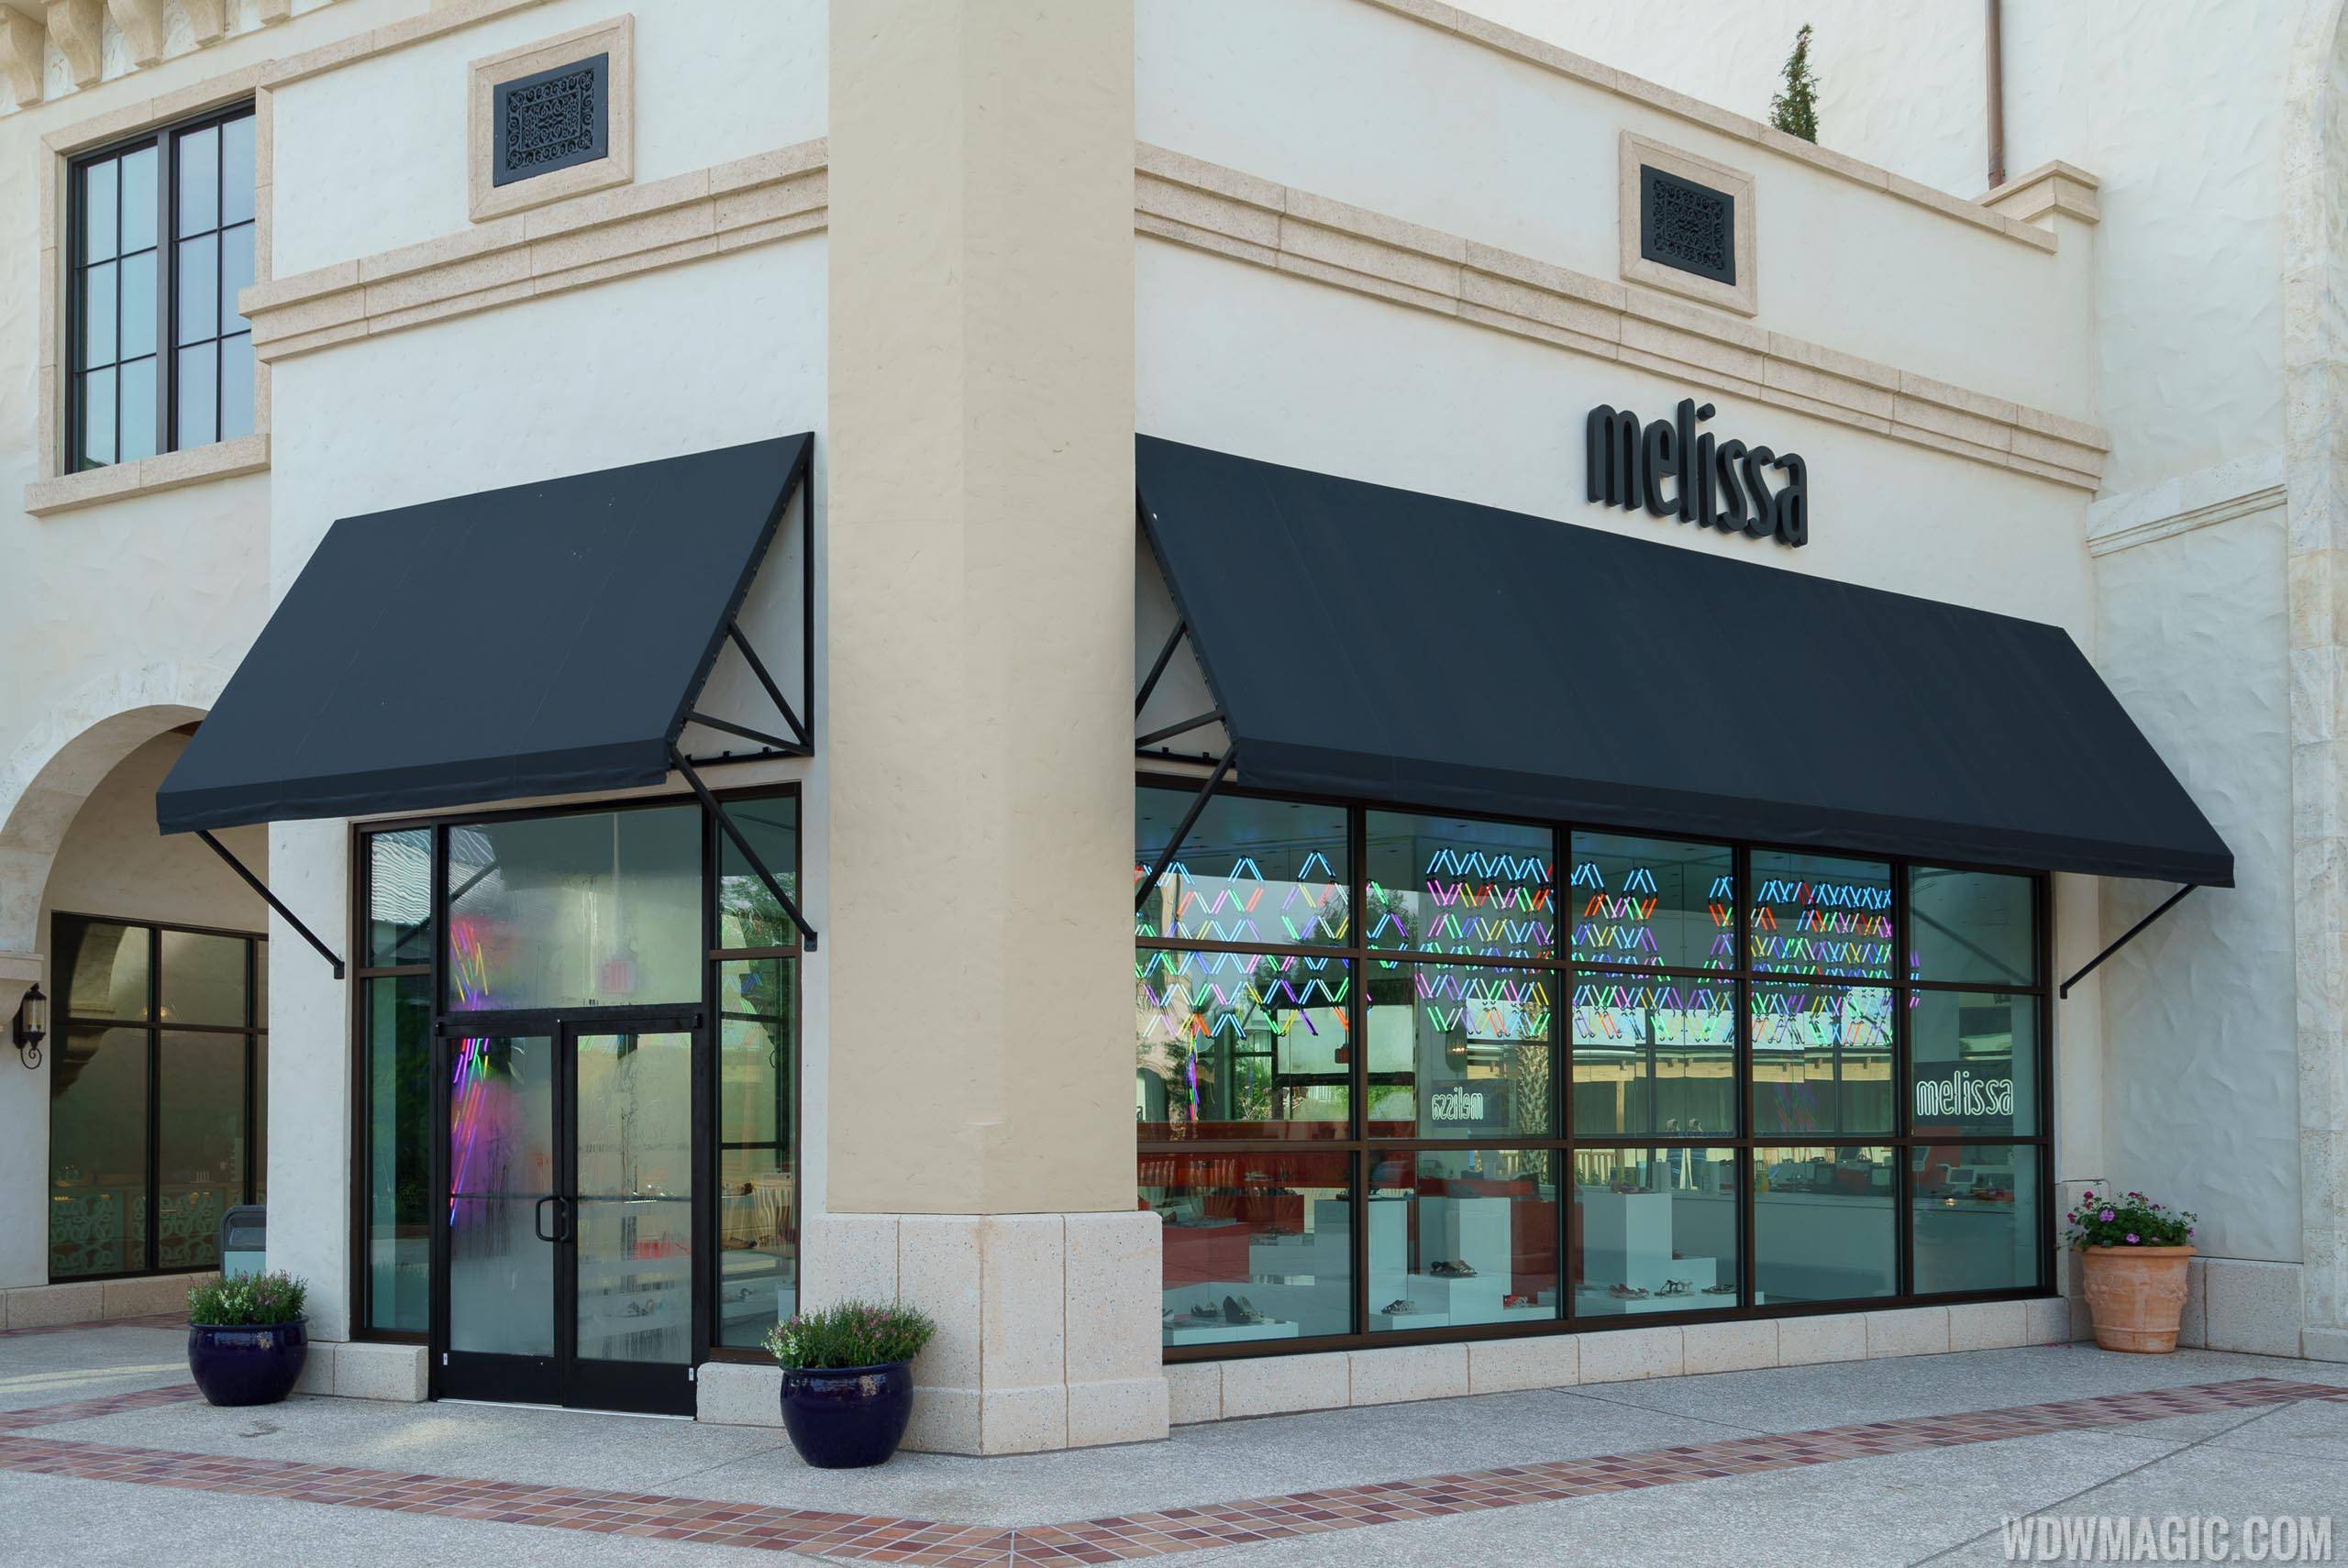 Melissa shoe store closed for refurbishment at Disney Springs